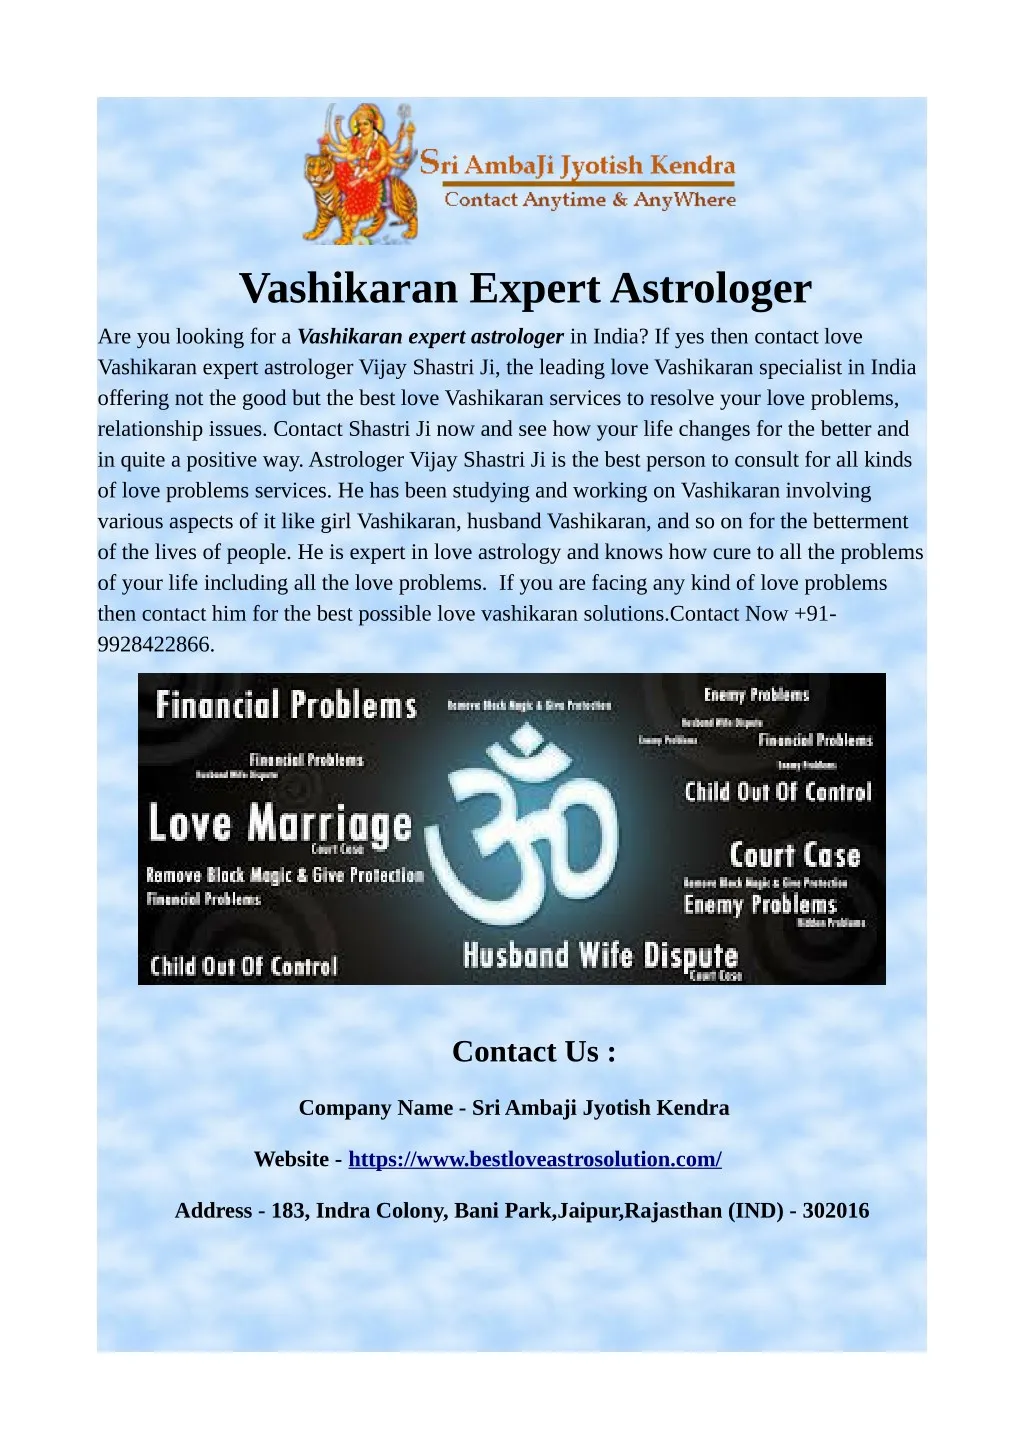 vashikaran expert astrologer